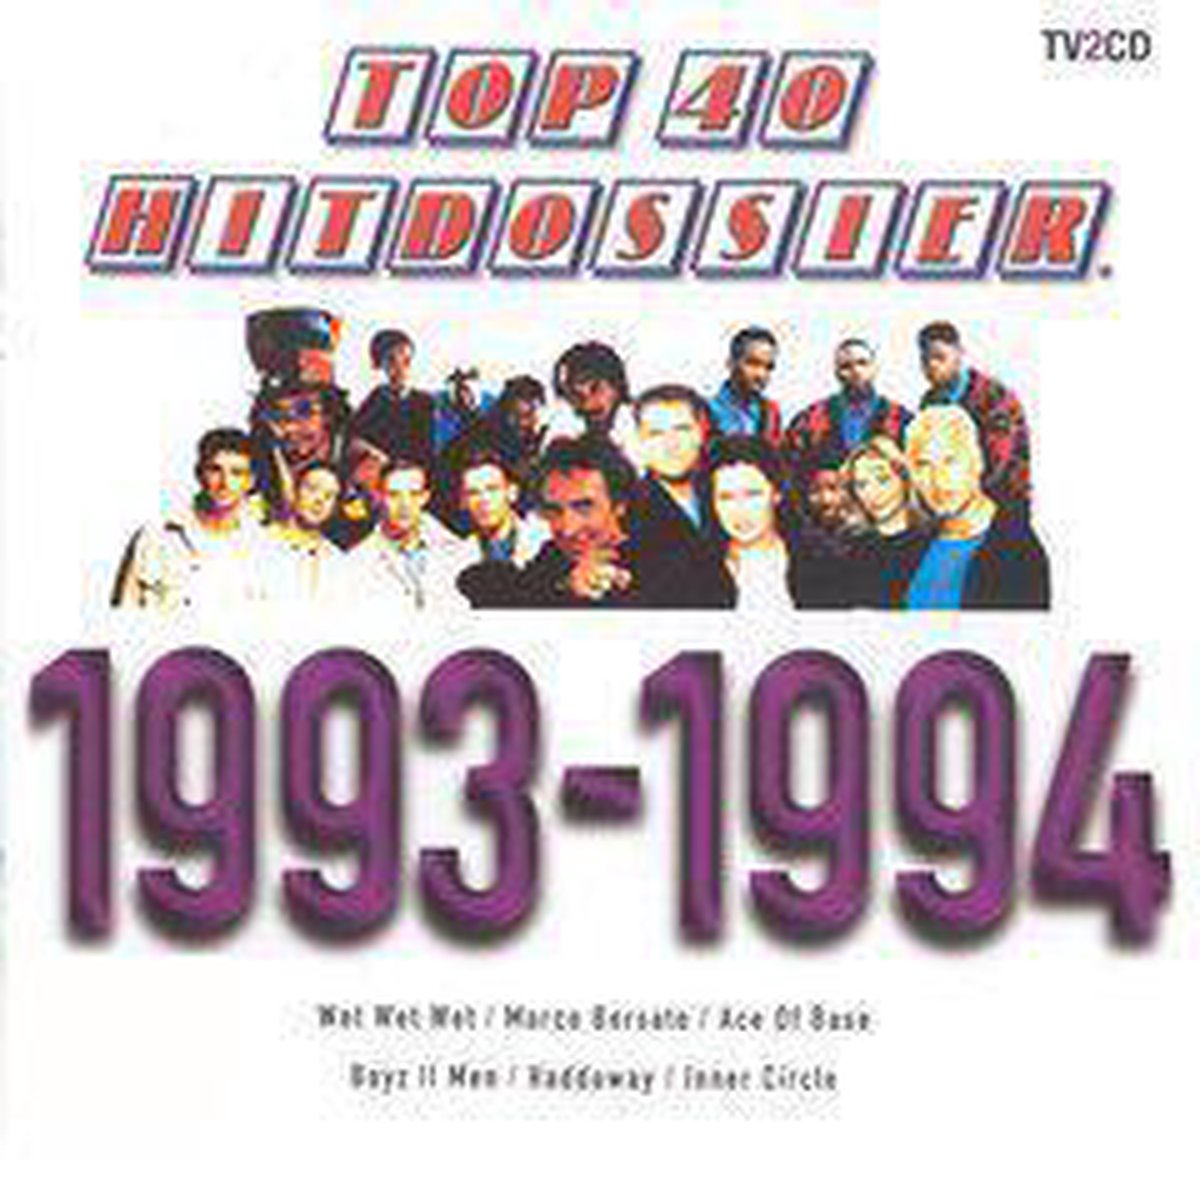 Various - Top 40 Hitdossier 1993-1994 - Top 40